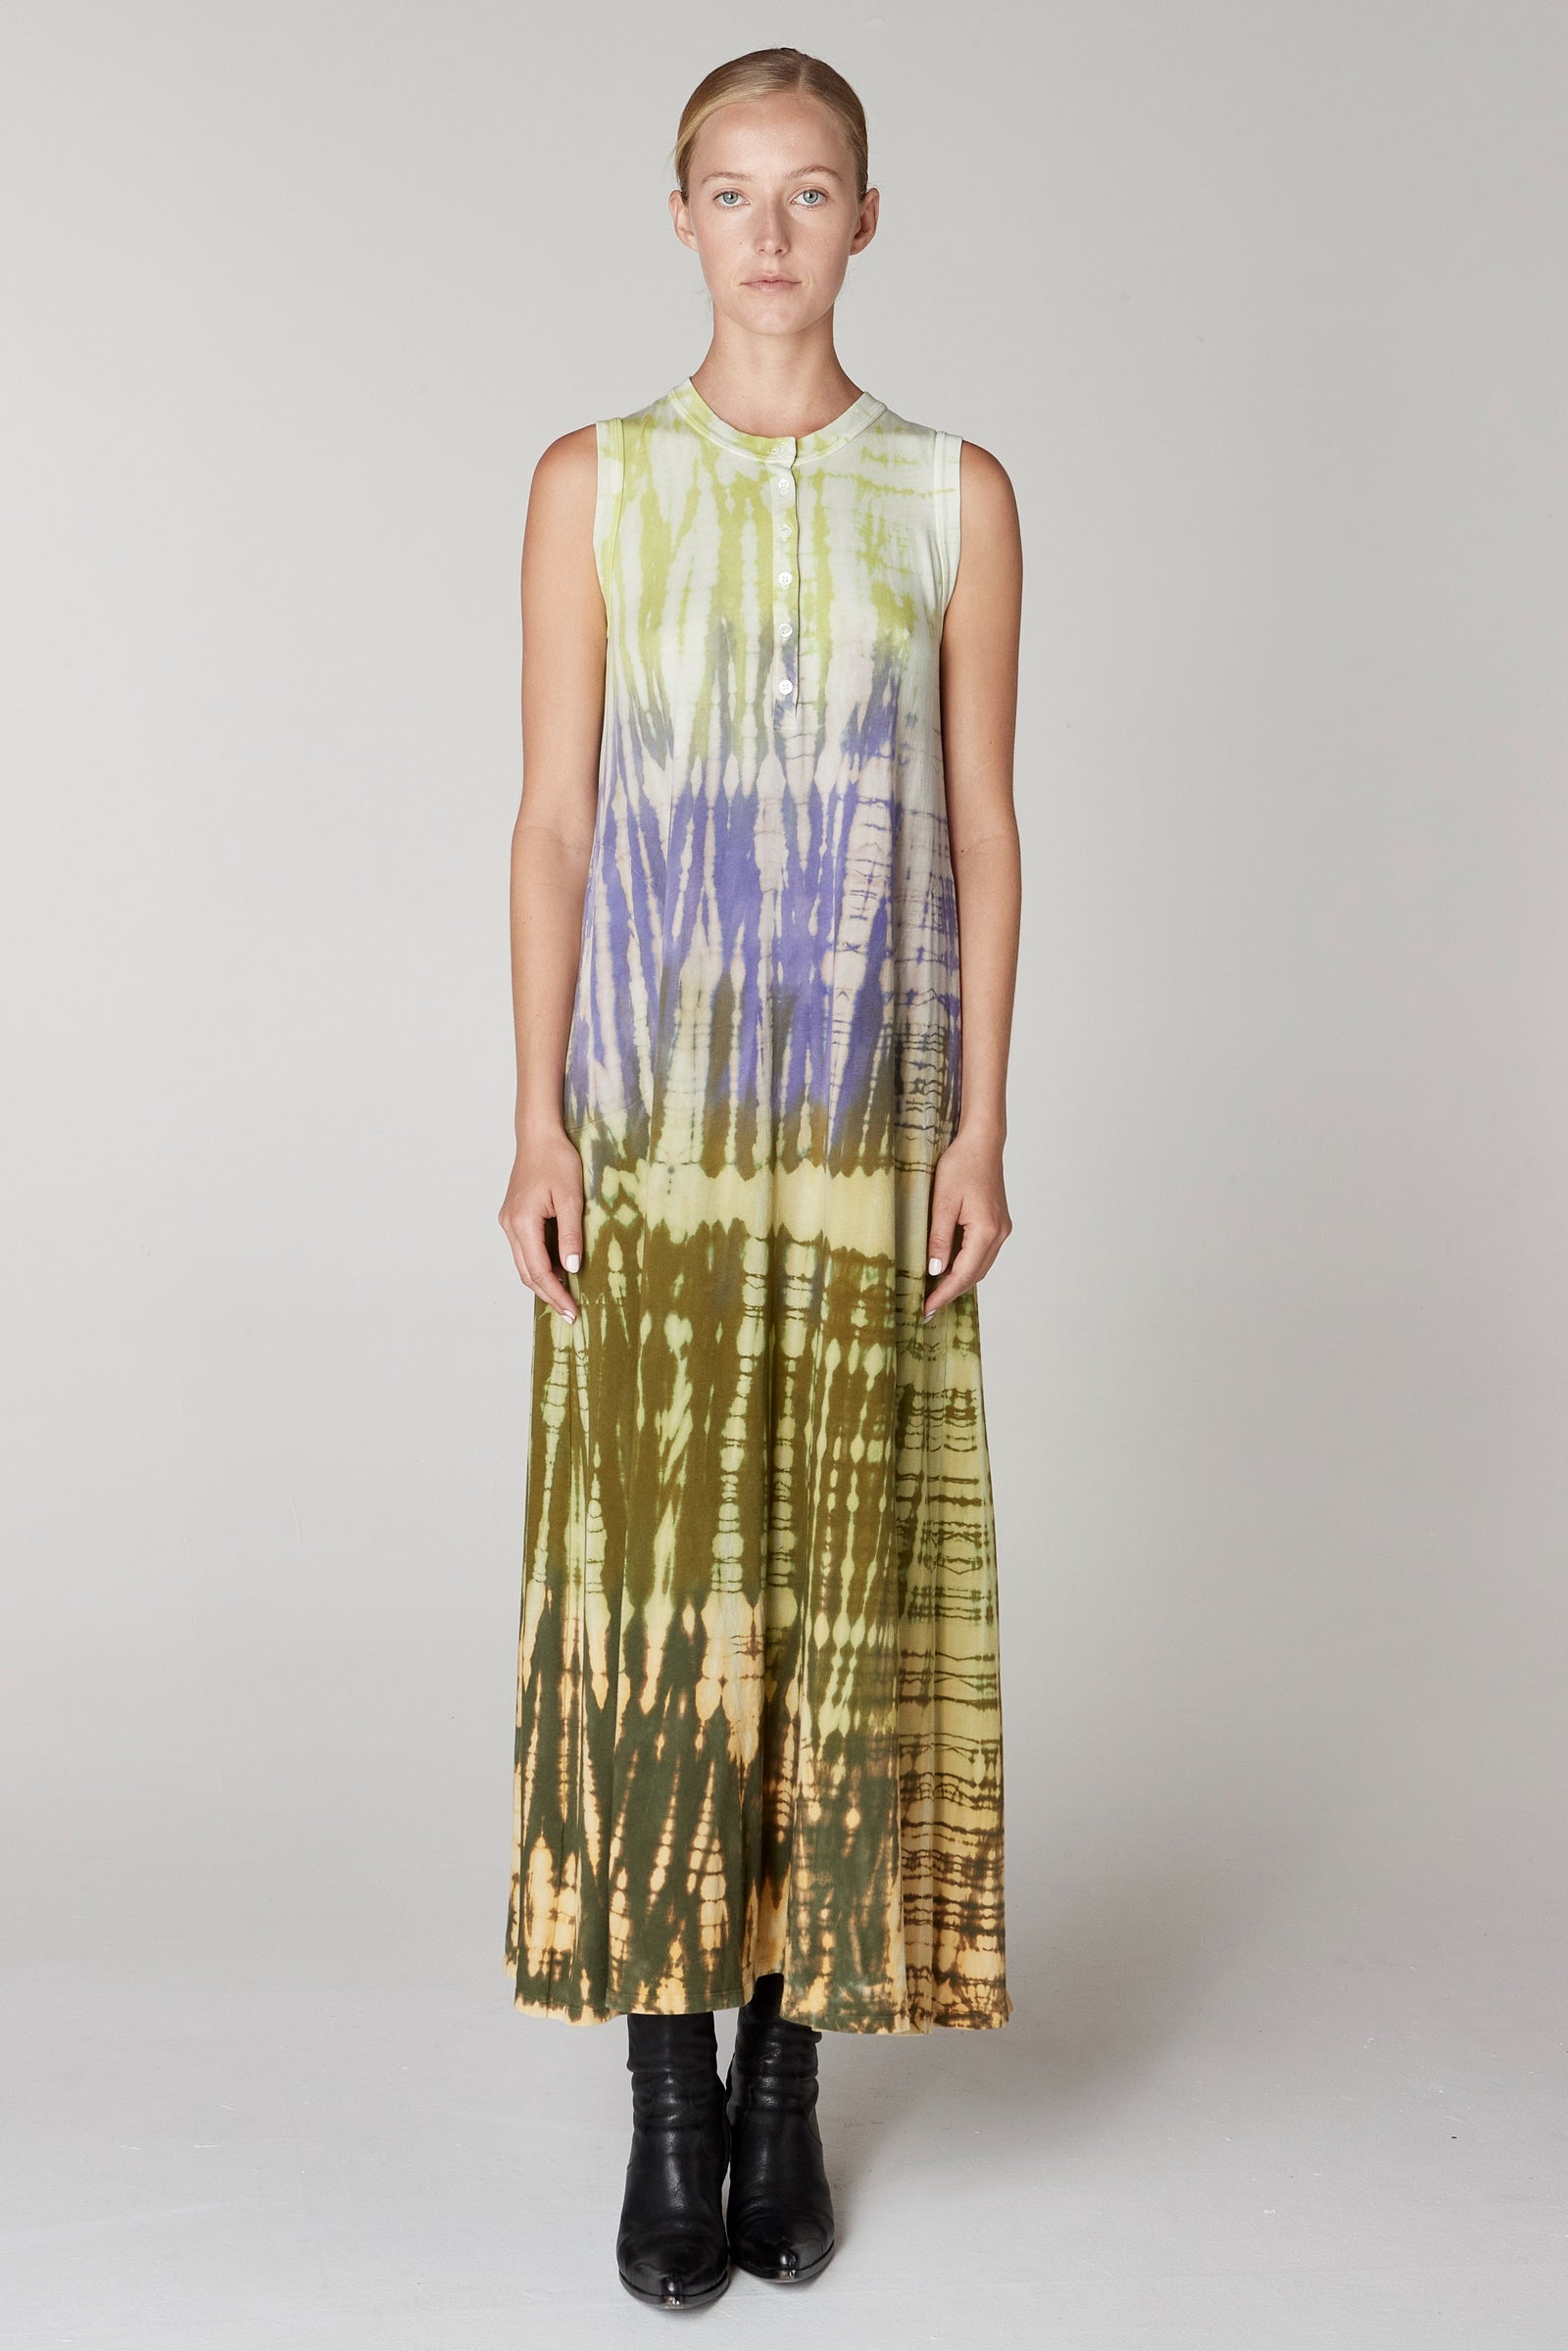 Moss/Lavender Tr Sleevess Christy Dress